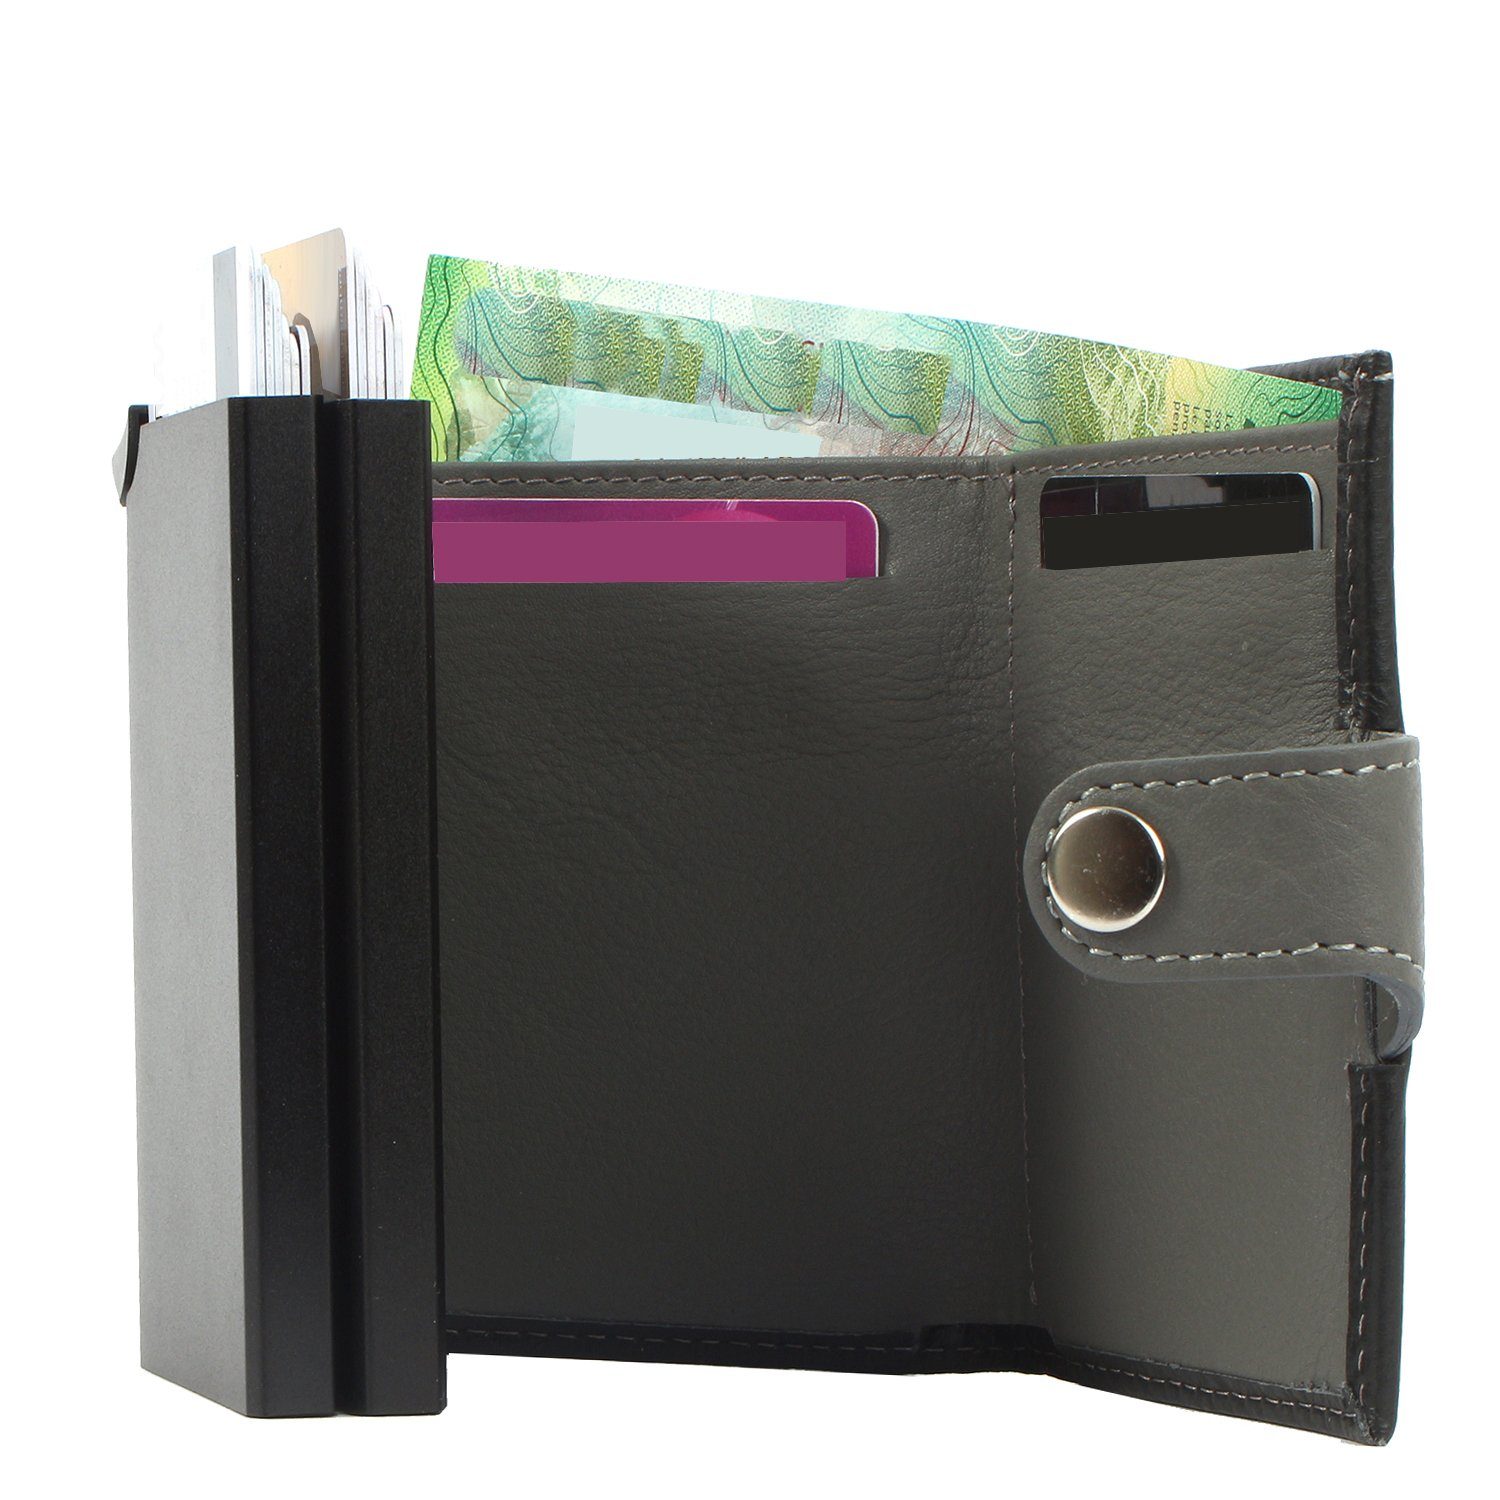 Margelisch Mini double natural aus leather, Geldbörse Leder Kreditkartenbörse noonyu RFID Upcycling